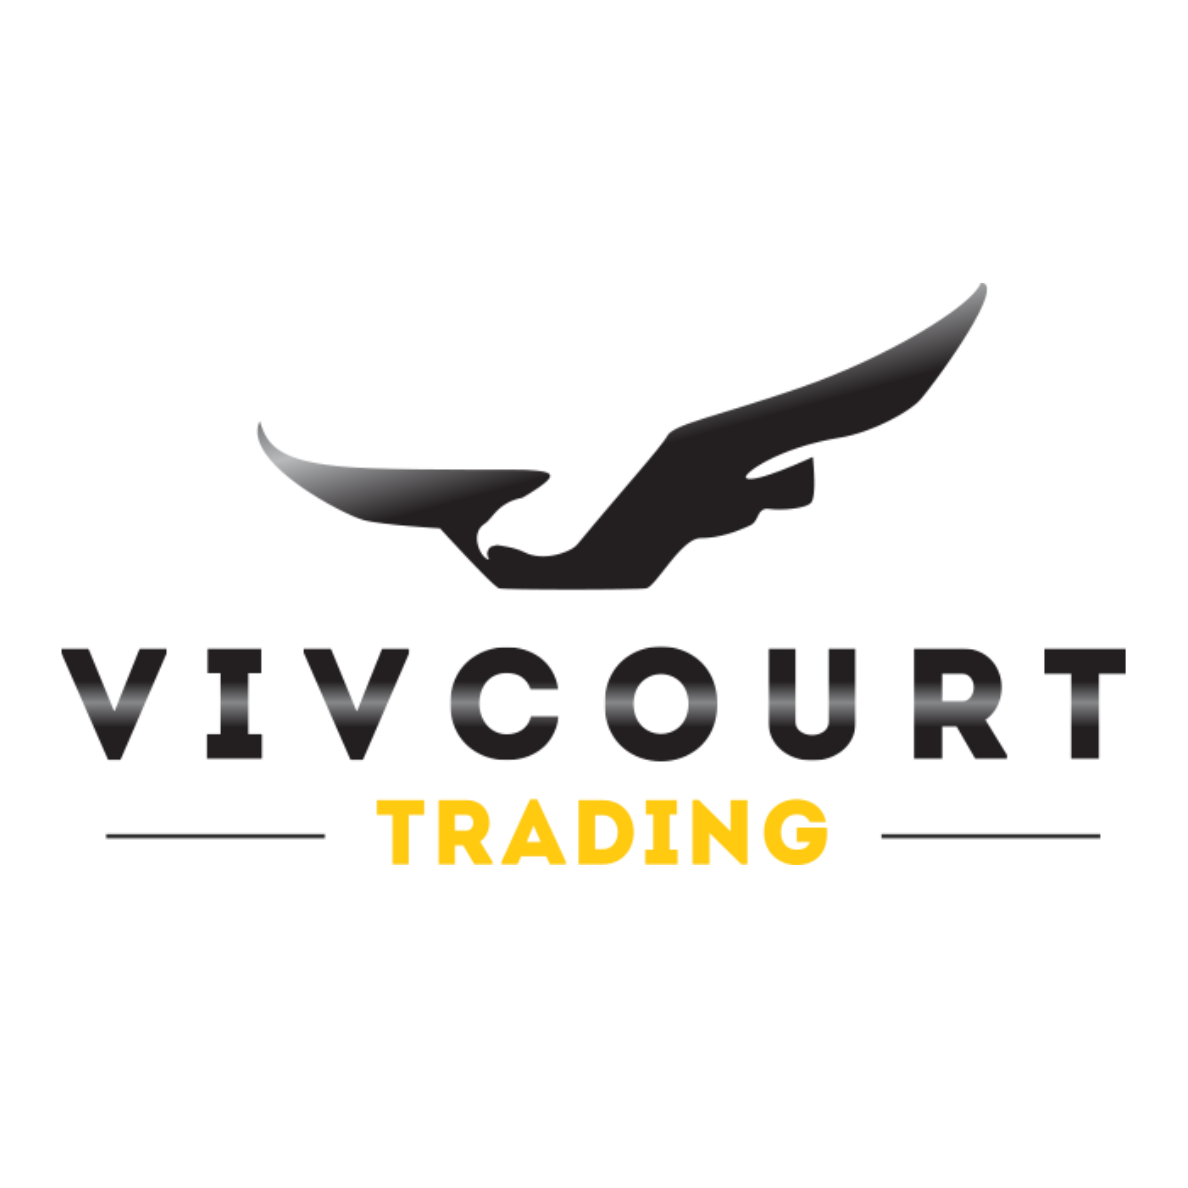 Vivienne Court Trading Pty Ltd